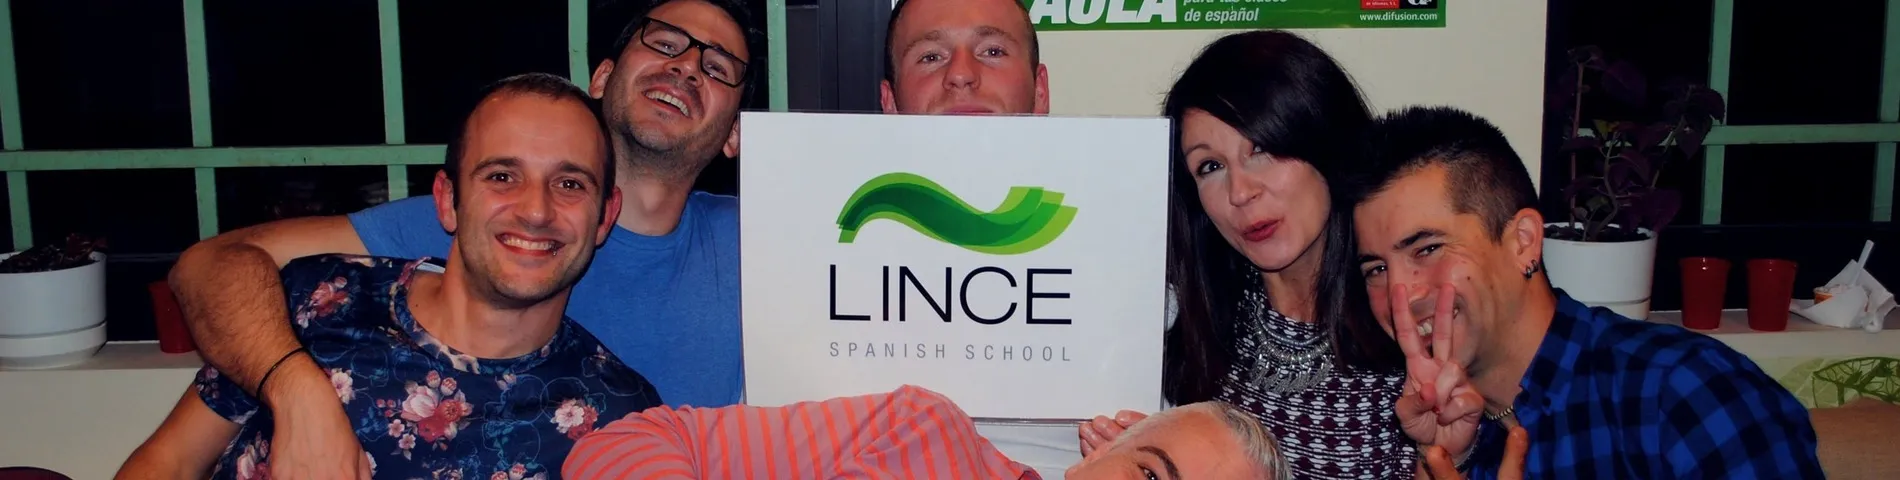 Lince Spanish School kép 1